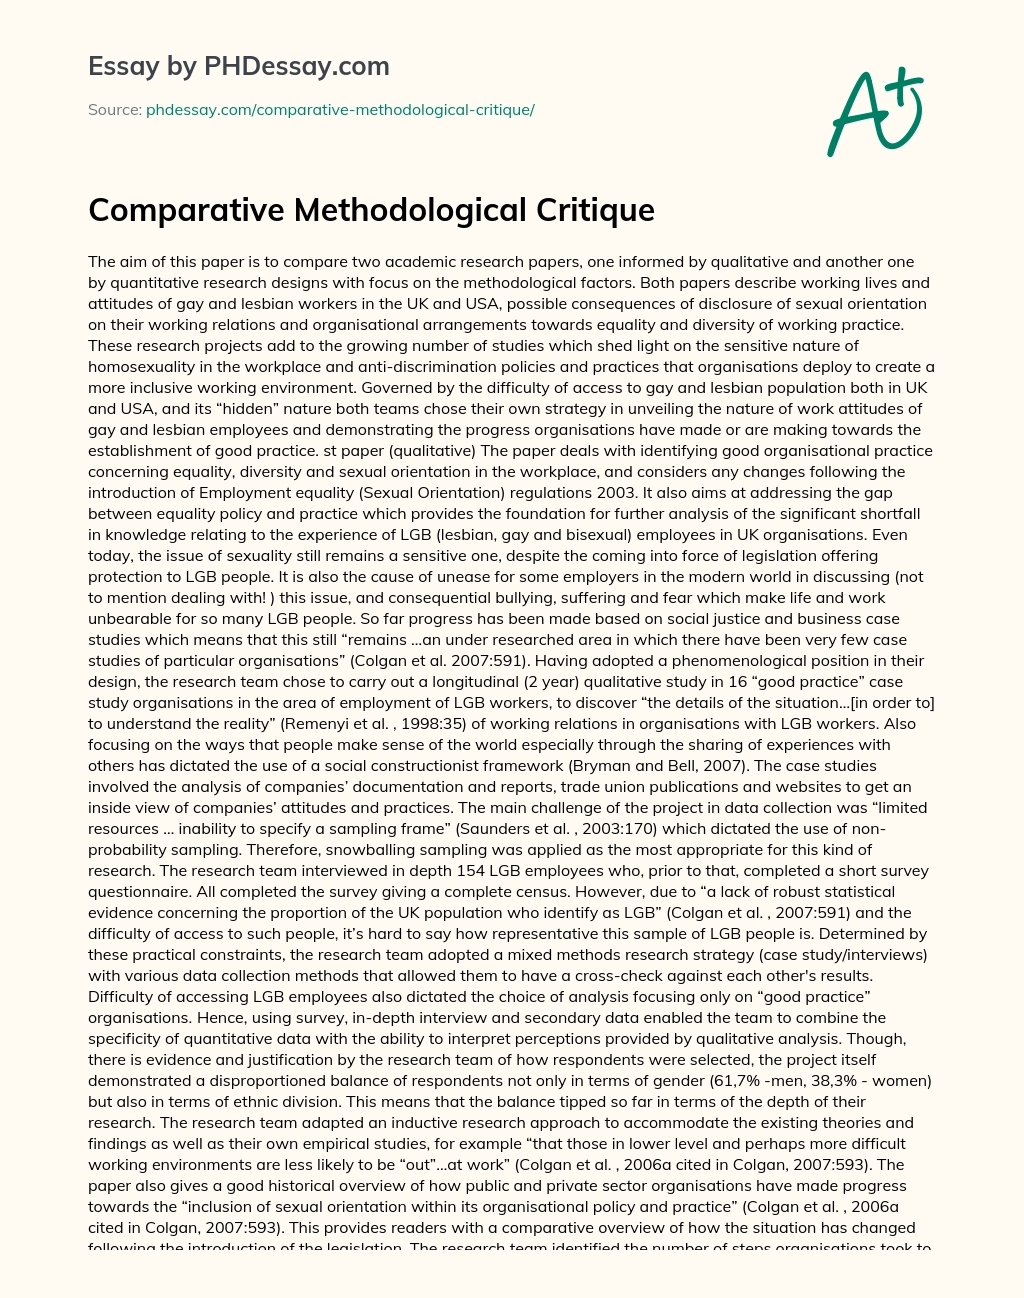 Comparative Methodological Critique essay